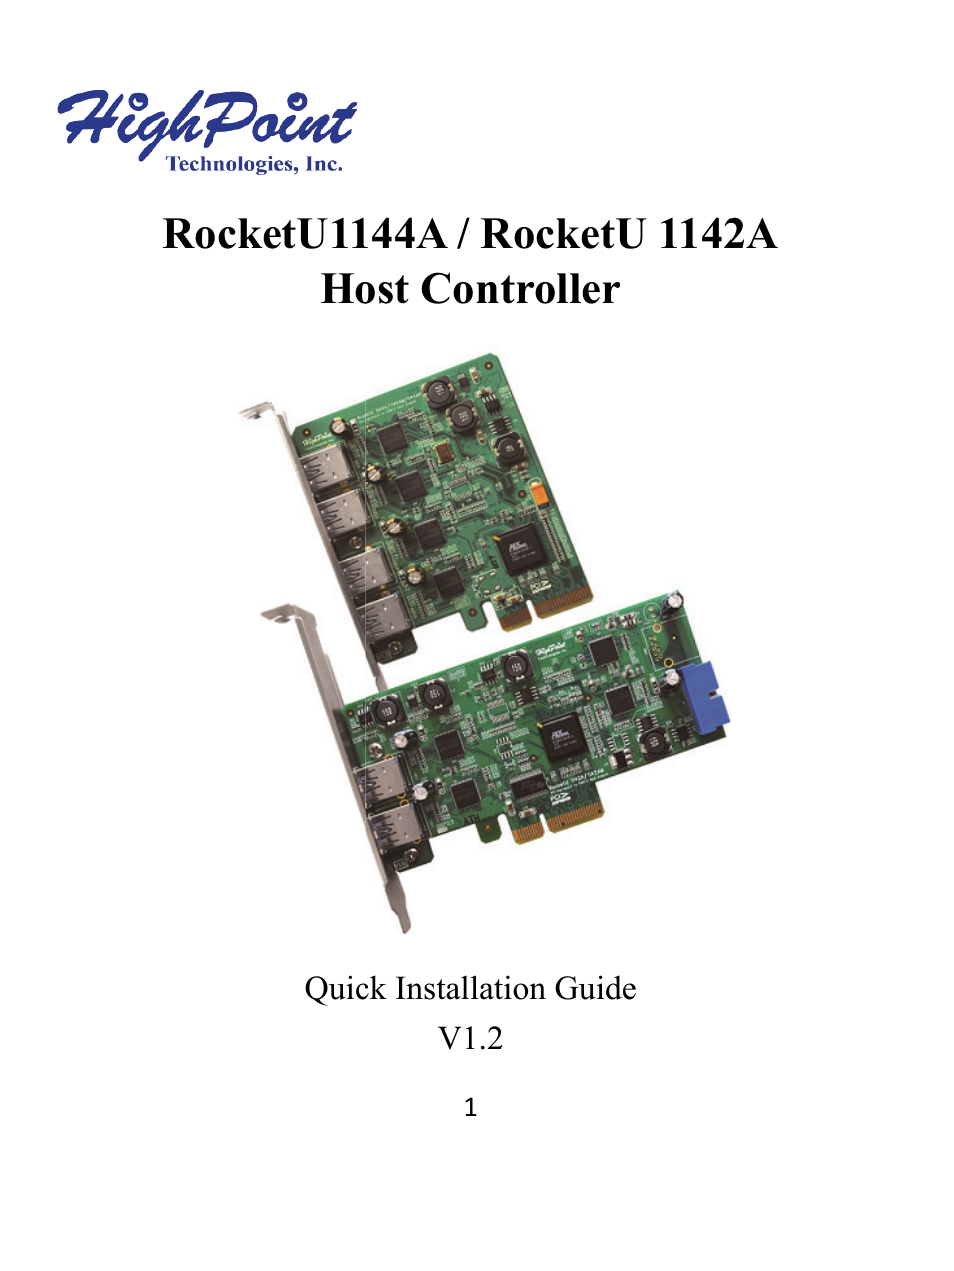 RocketU 1142A